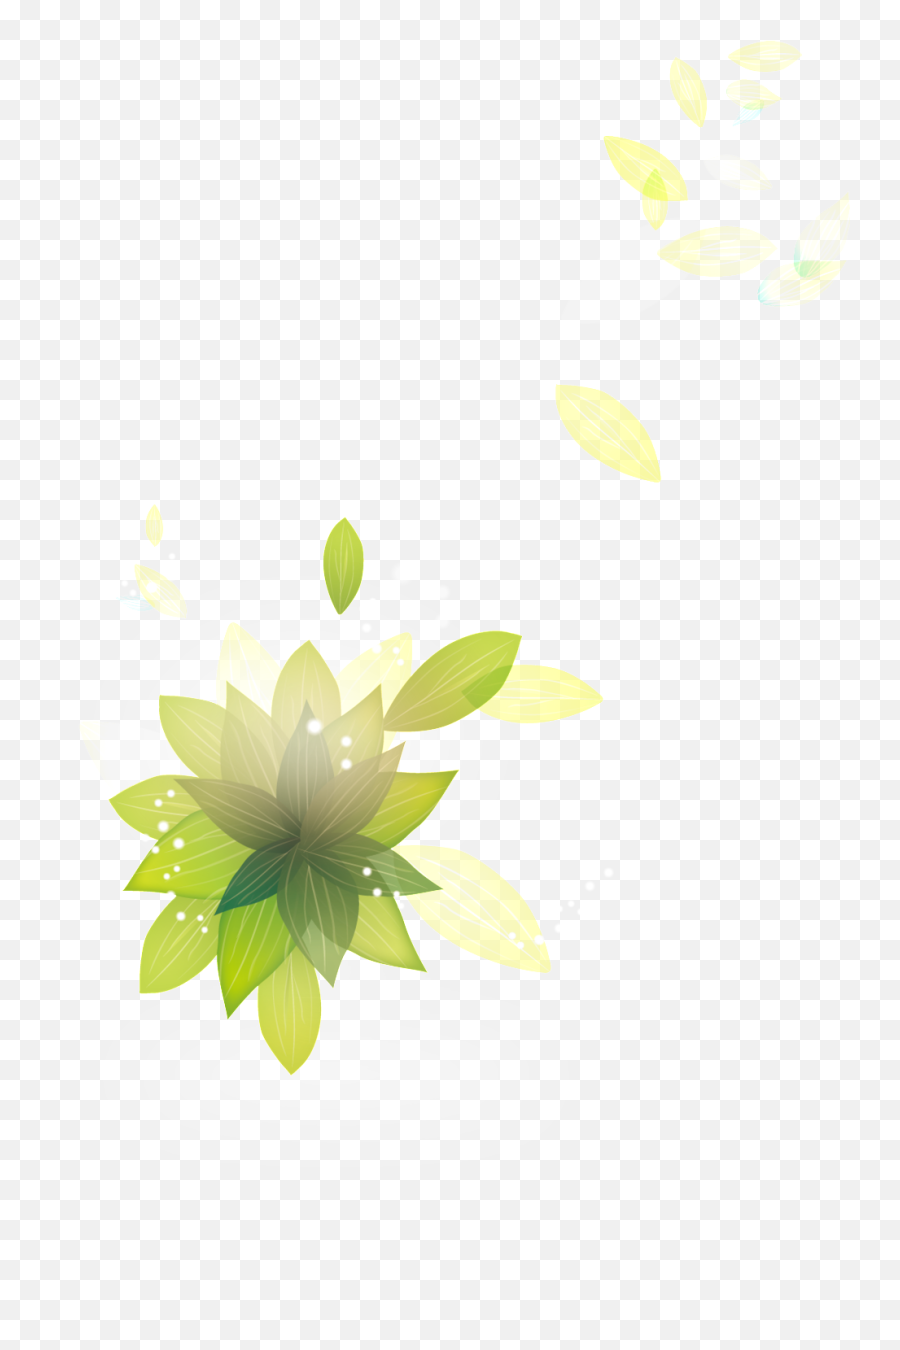 Leaf Png Image - Sacred Lotus,Leaf Cartoon Png